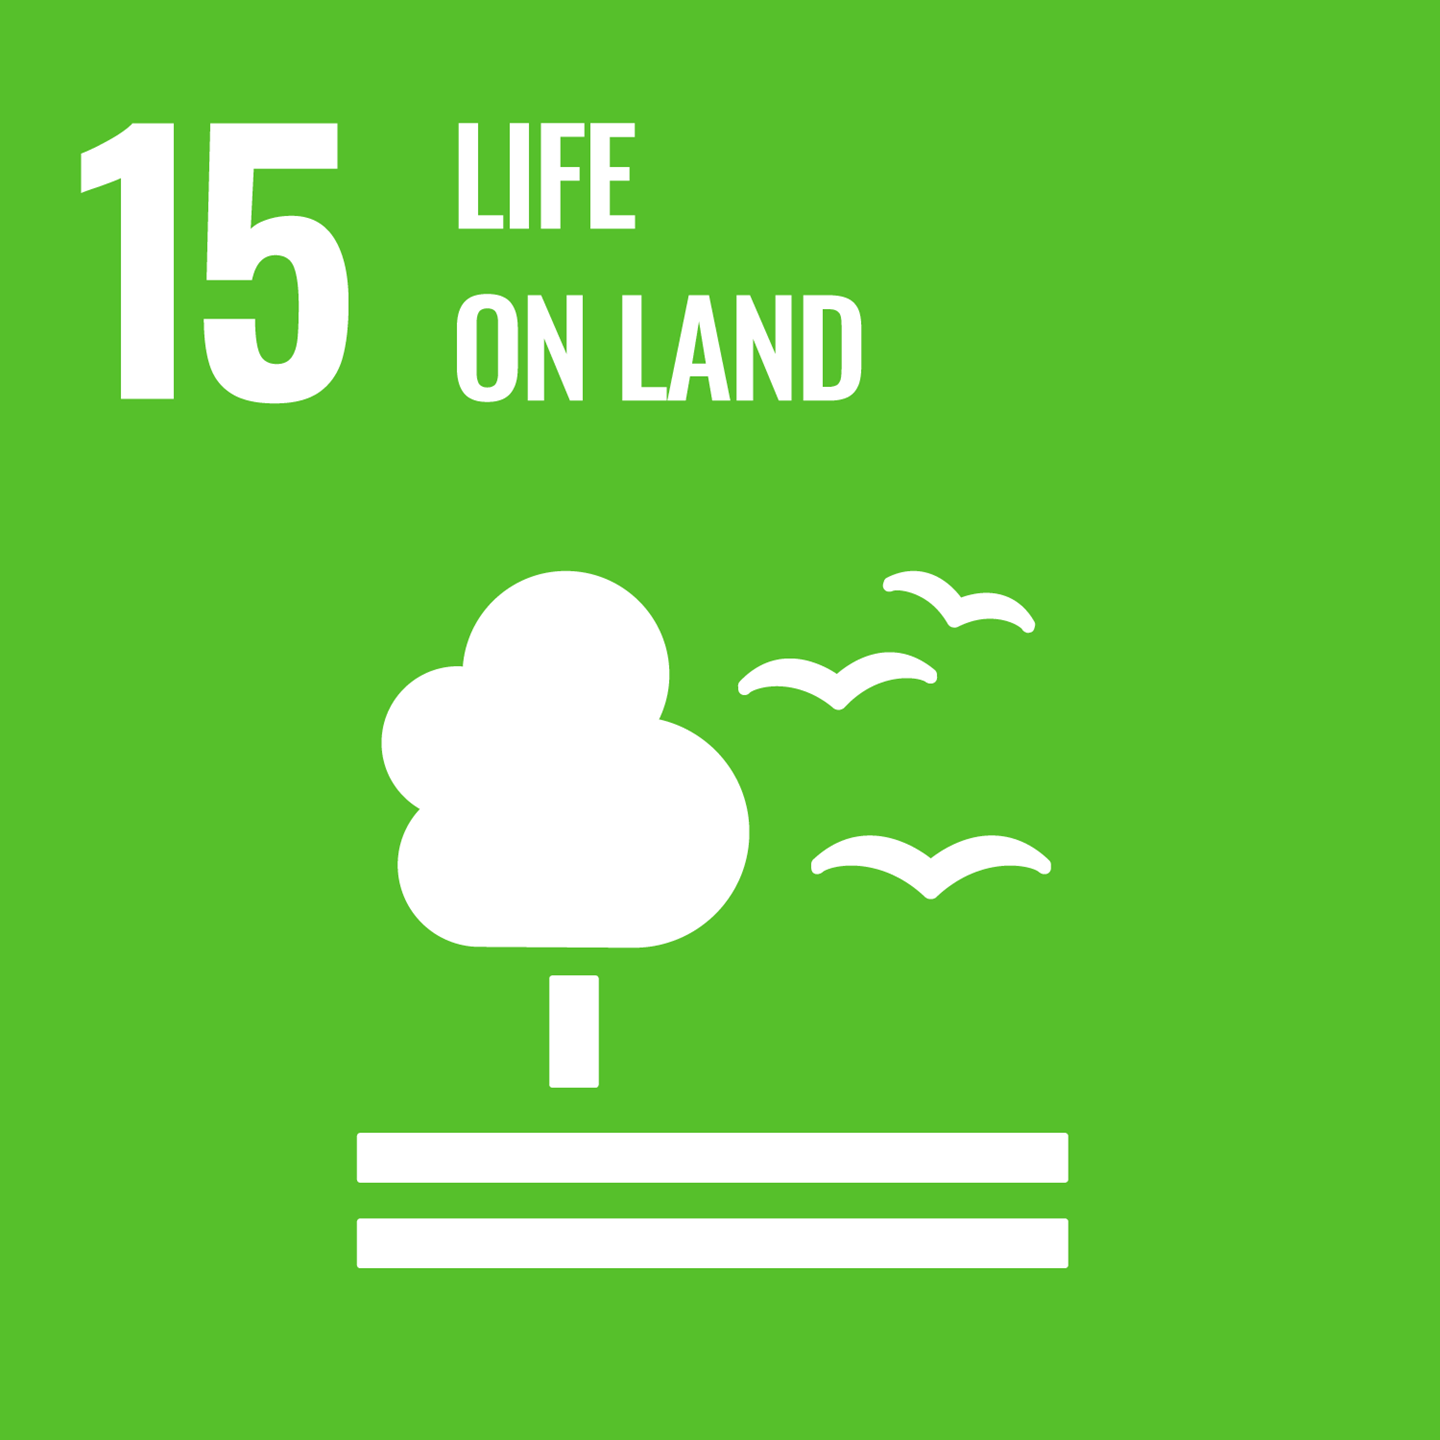 Sustainable Development Goal #15 - Life on Land